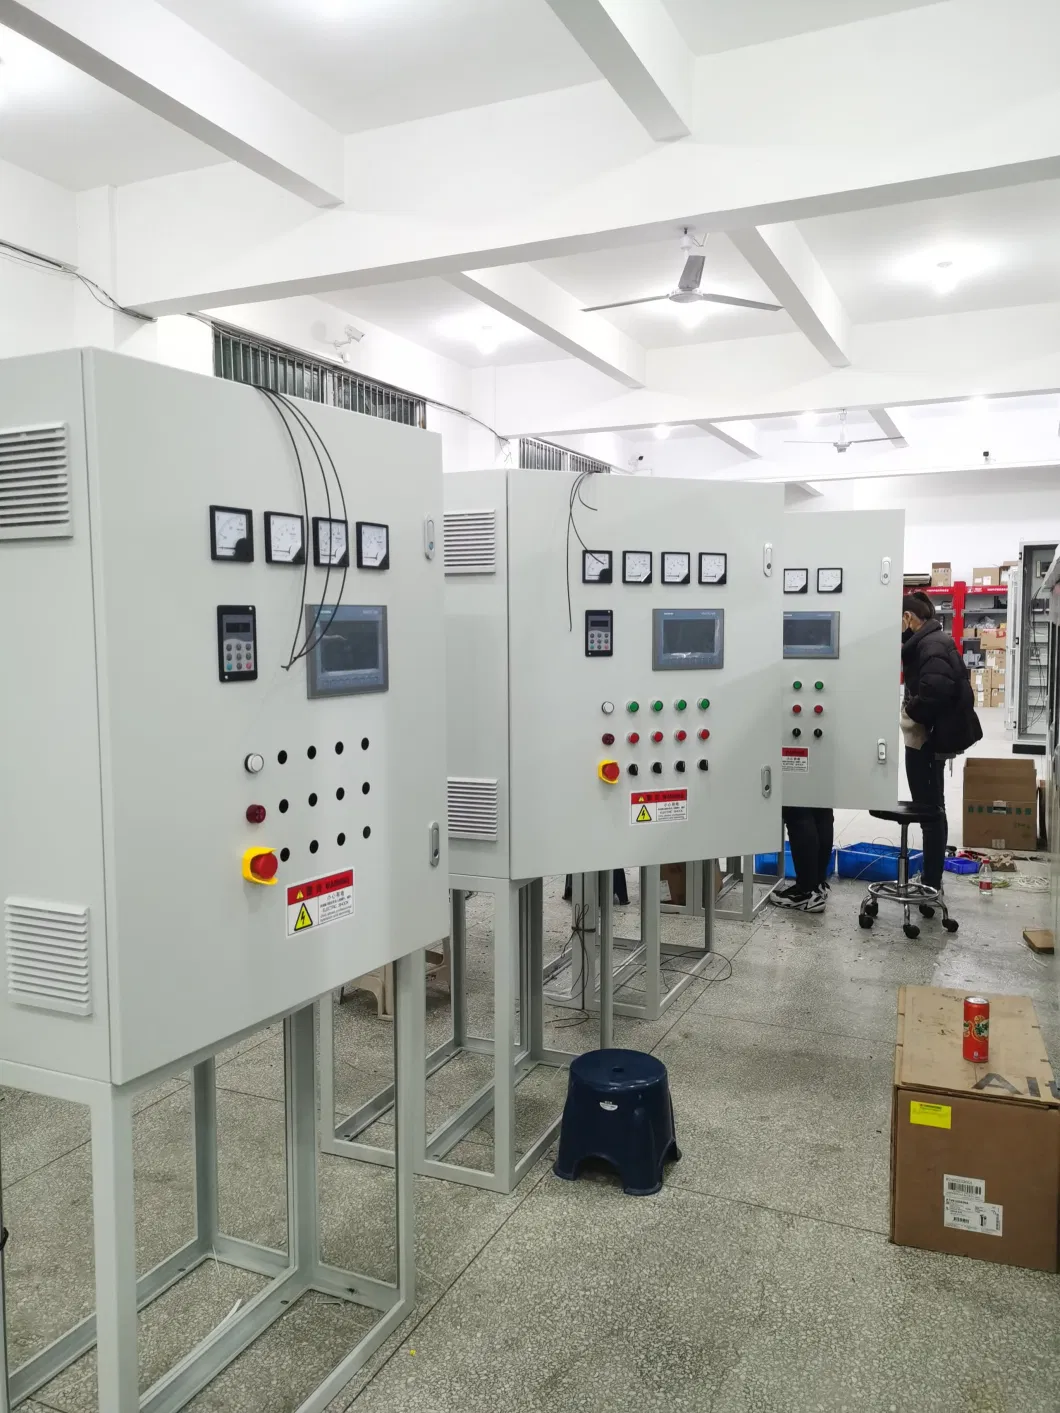 93kw Fan Water Pump VFD Siemens PLC Program Distribution Cabinet Control Panel